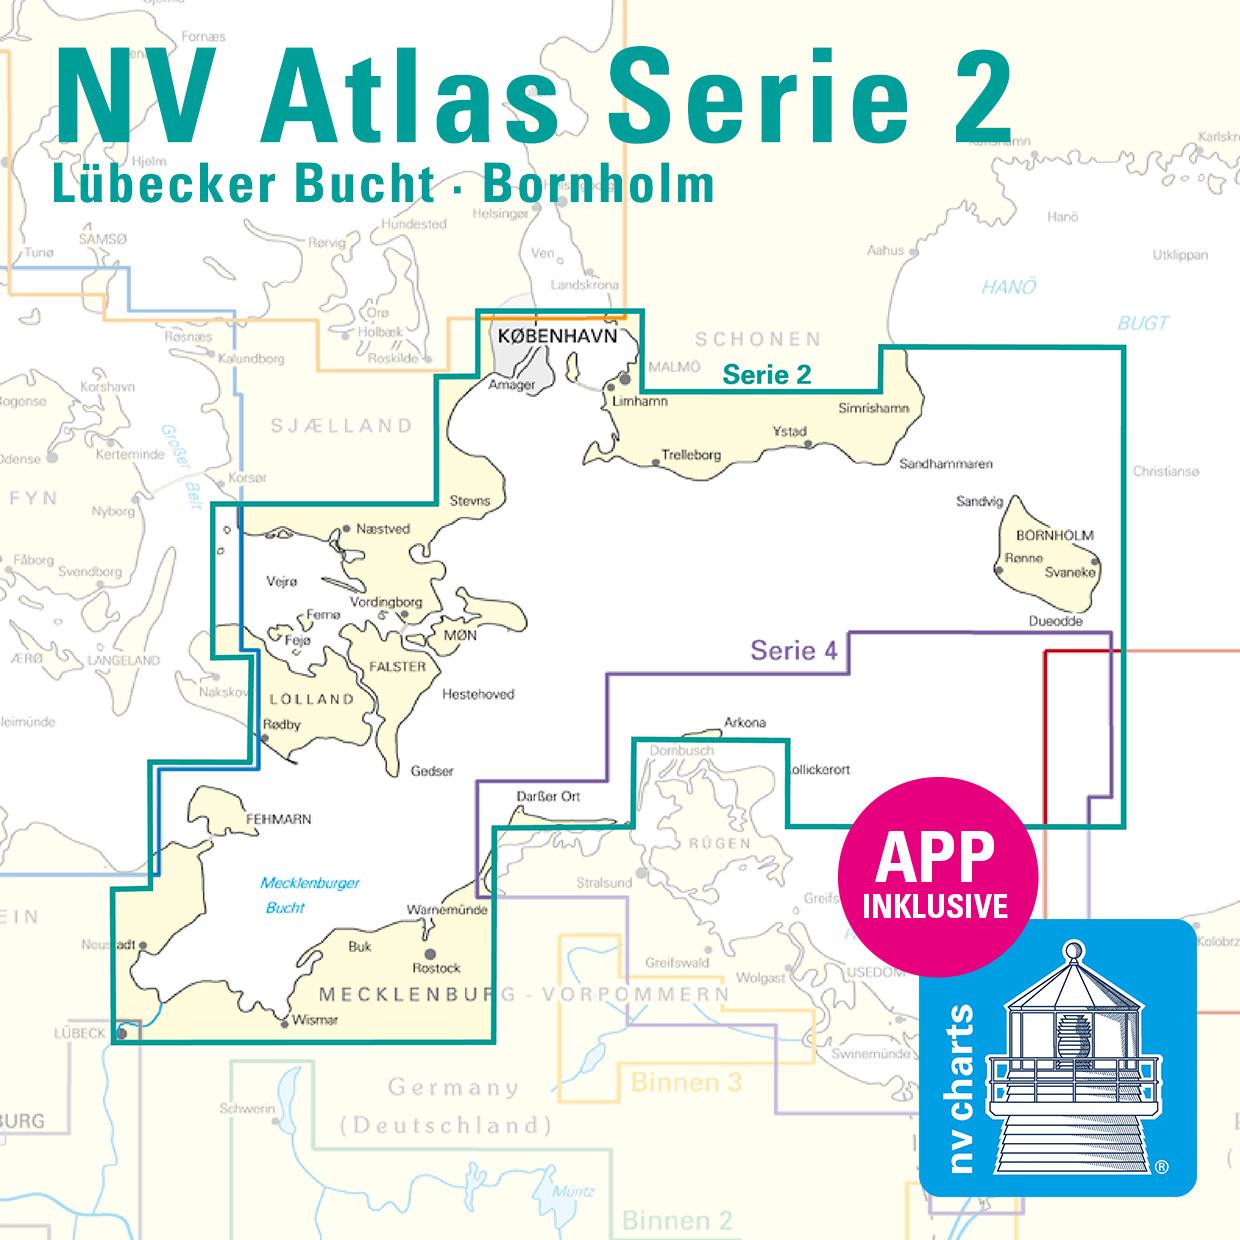 NV Charts Baltic Serie 2 Plano Lübecker Bucht - Bornholm - Kopenhagen